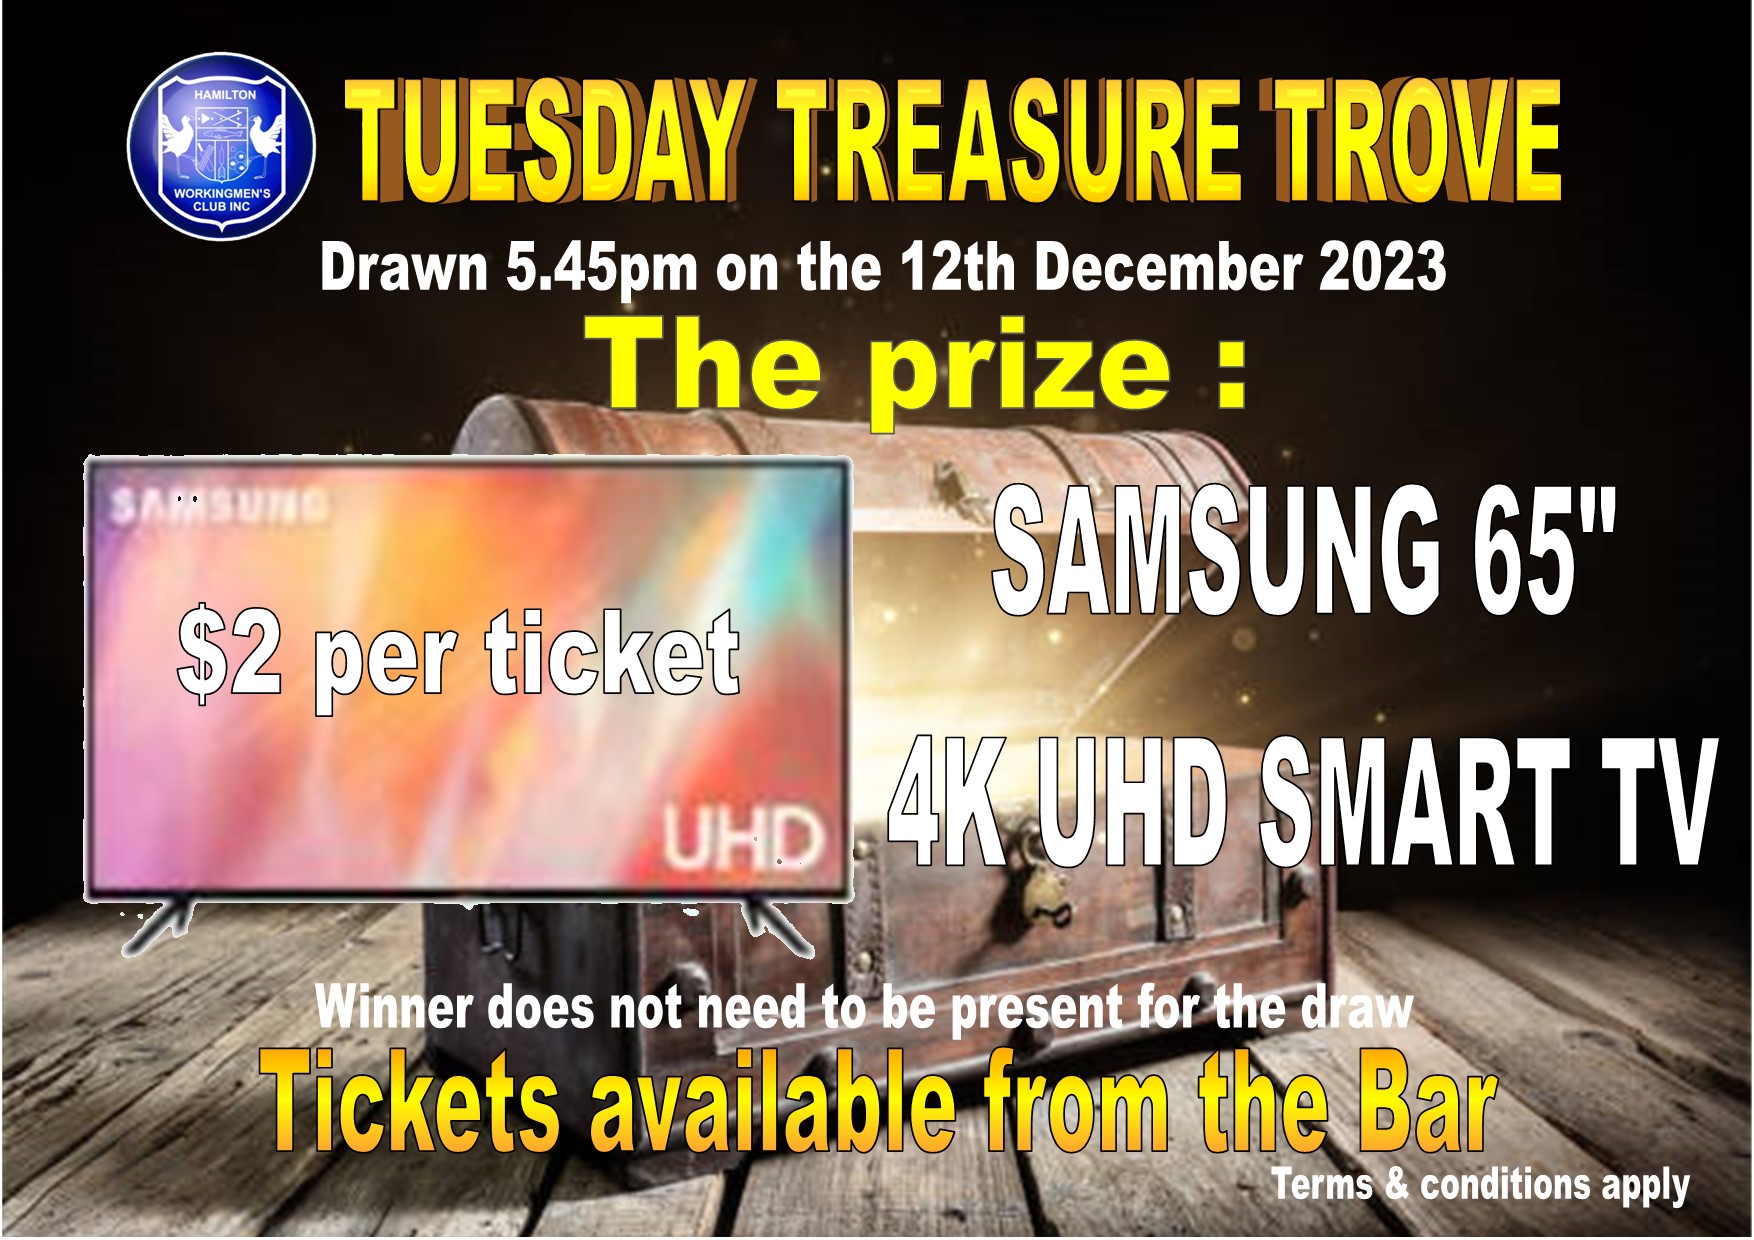 Tuesday Treasure Trove Poster 12 December 2023